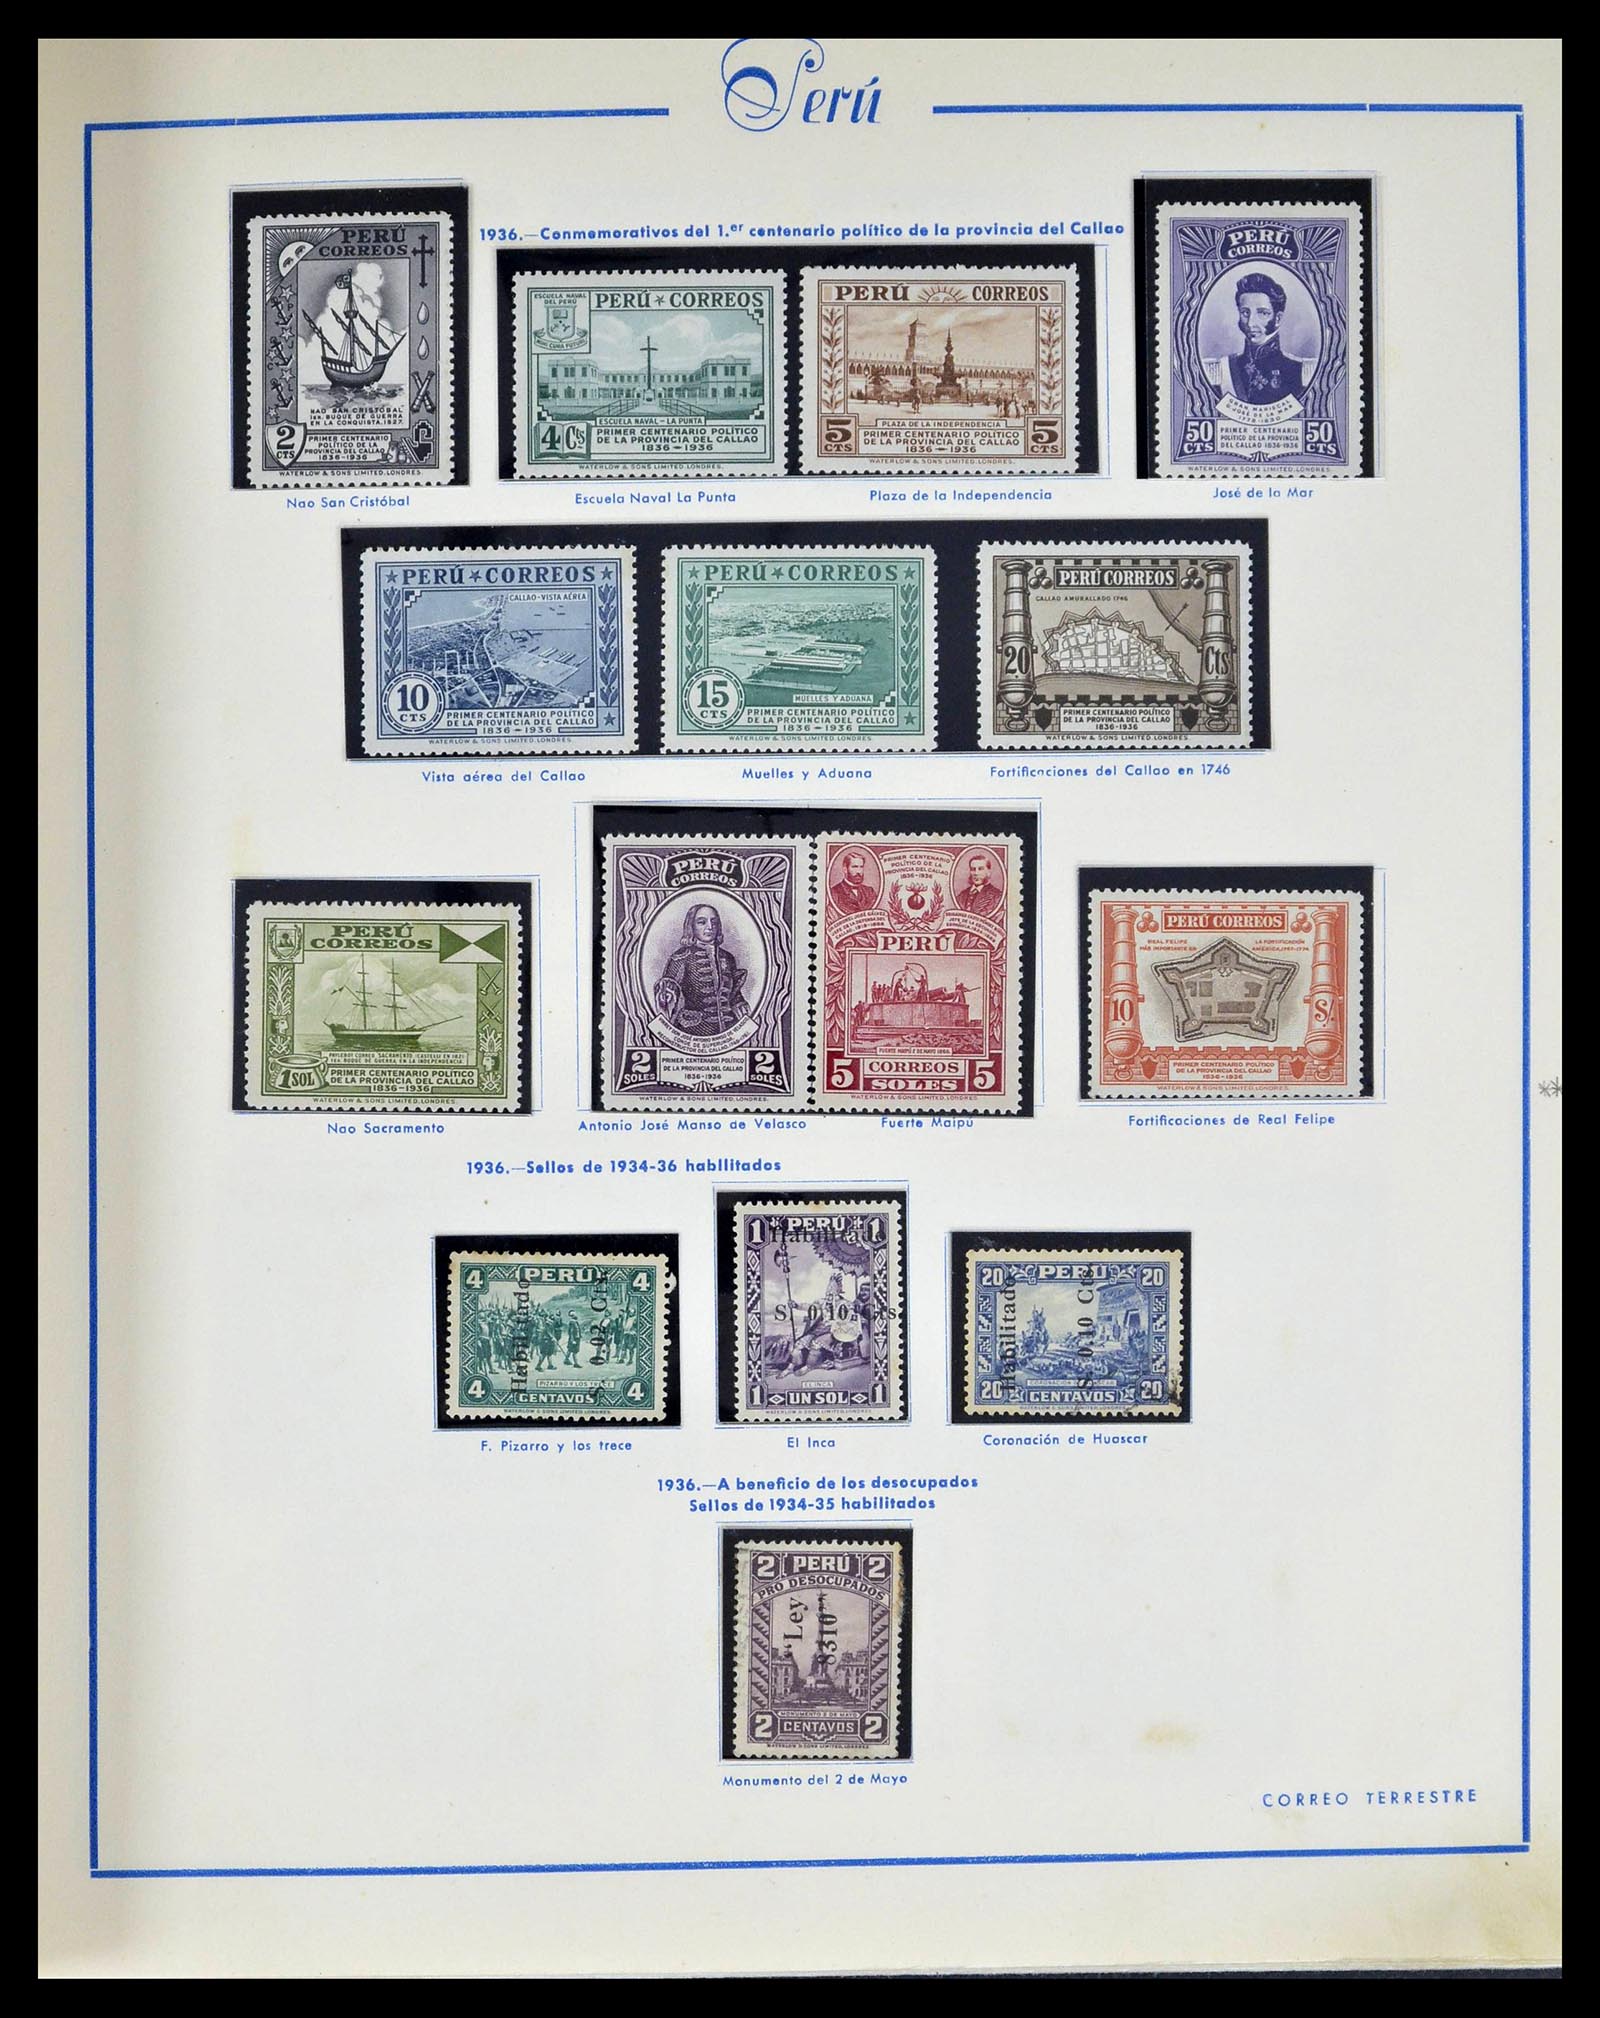 39214 0018 - Stamp collection 39214 Peru 1857-1981.